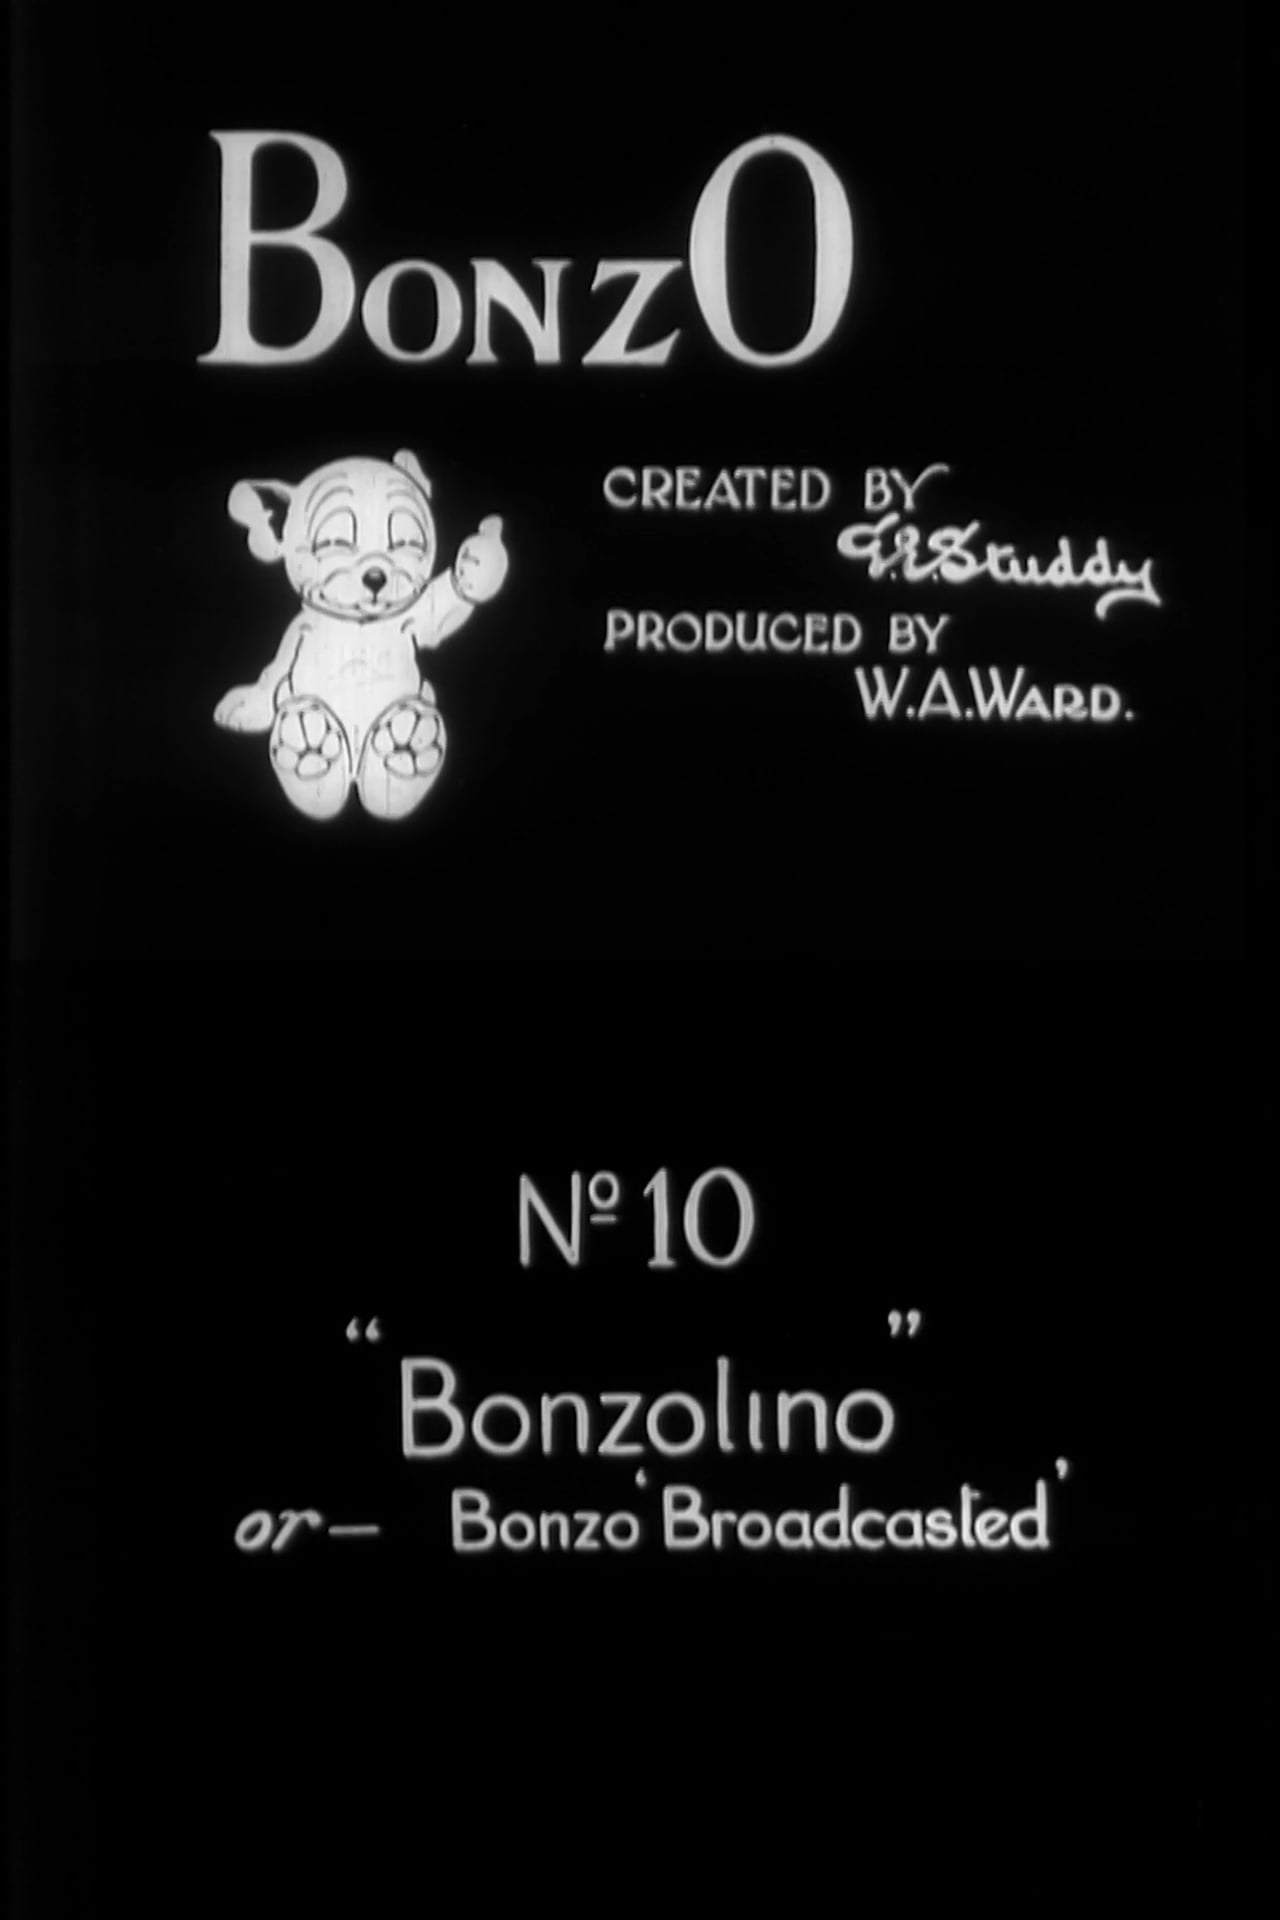 Bonzolino or – Bonzo Broadcasted